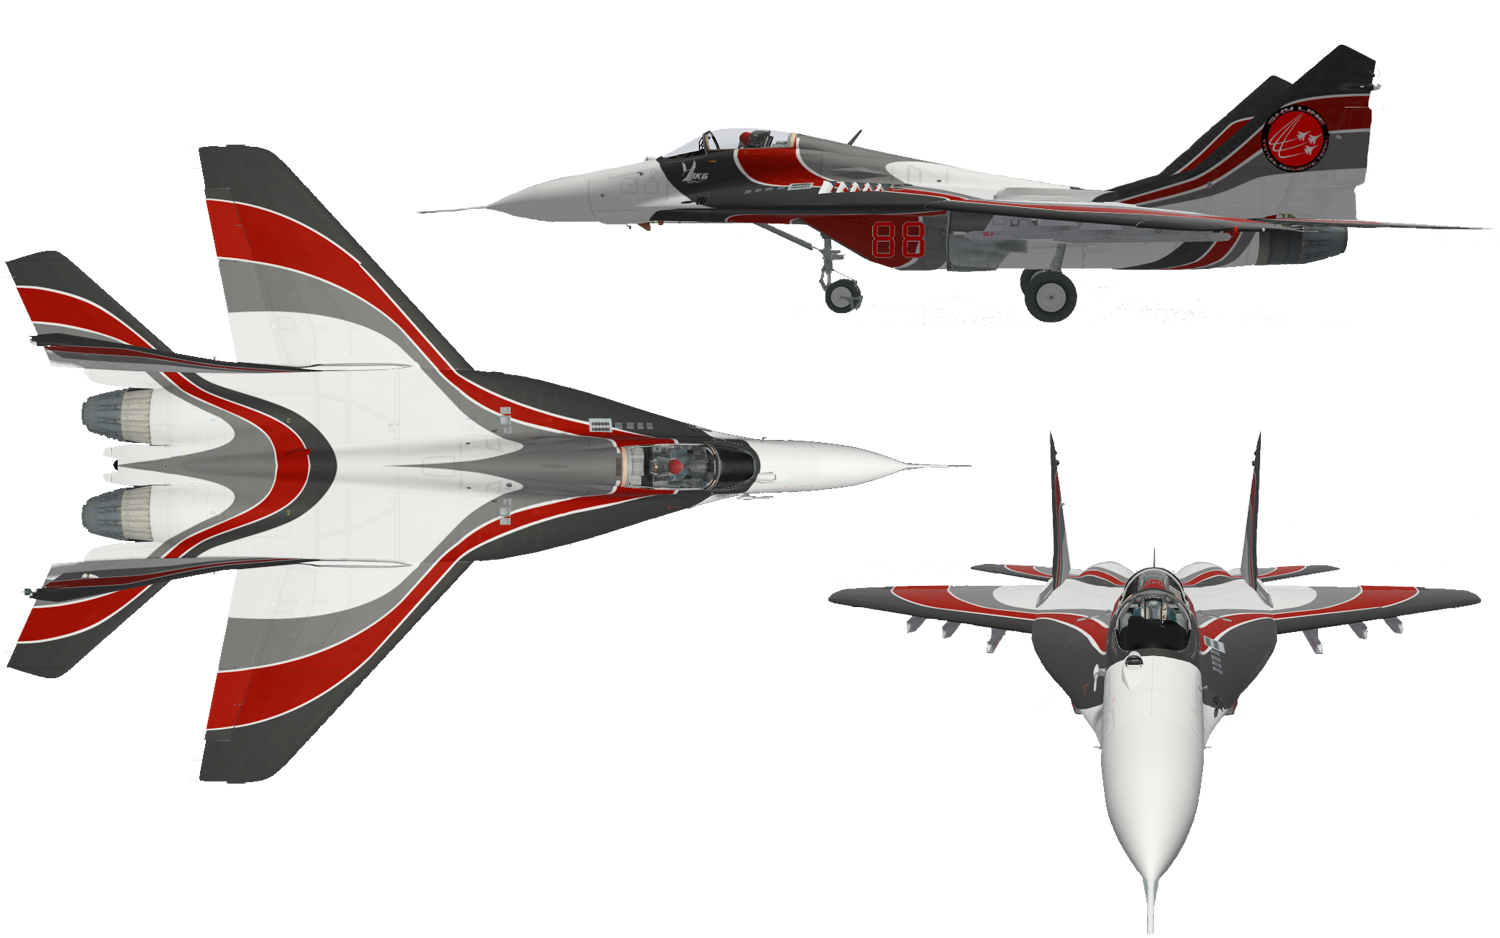 VAT Skyline MiG-29S Technical Characteristics